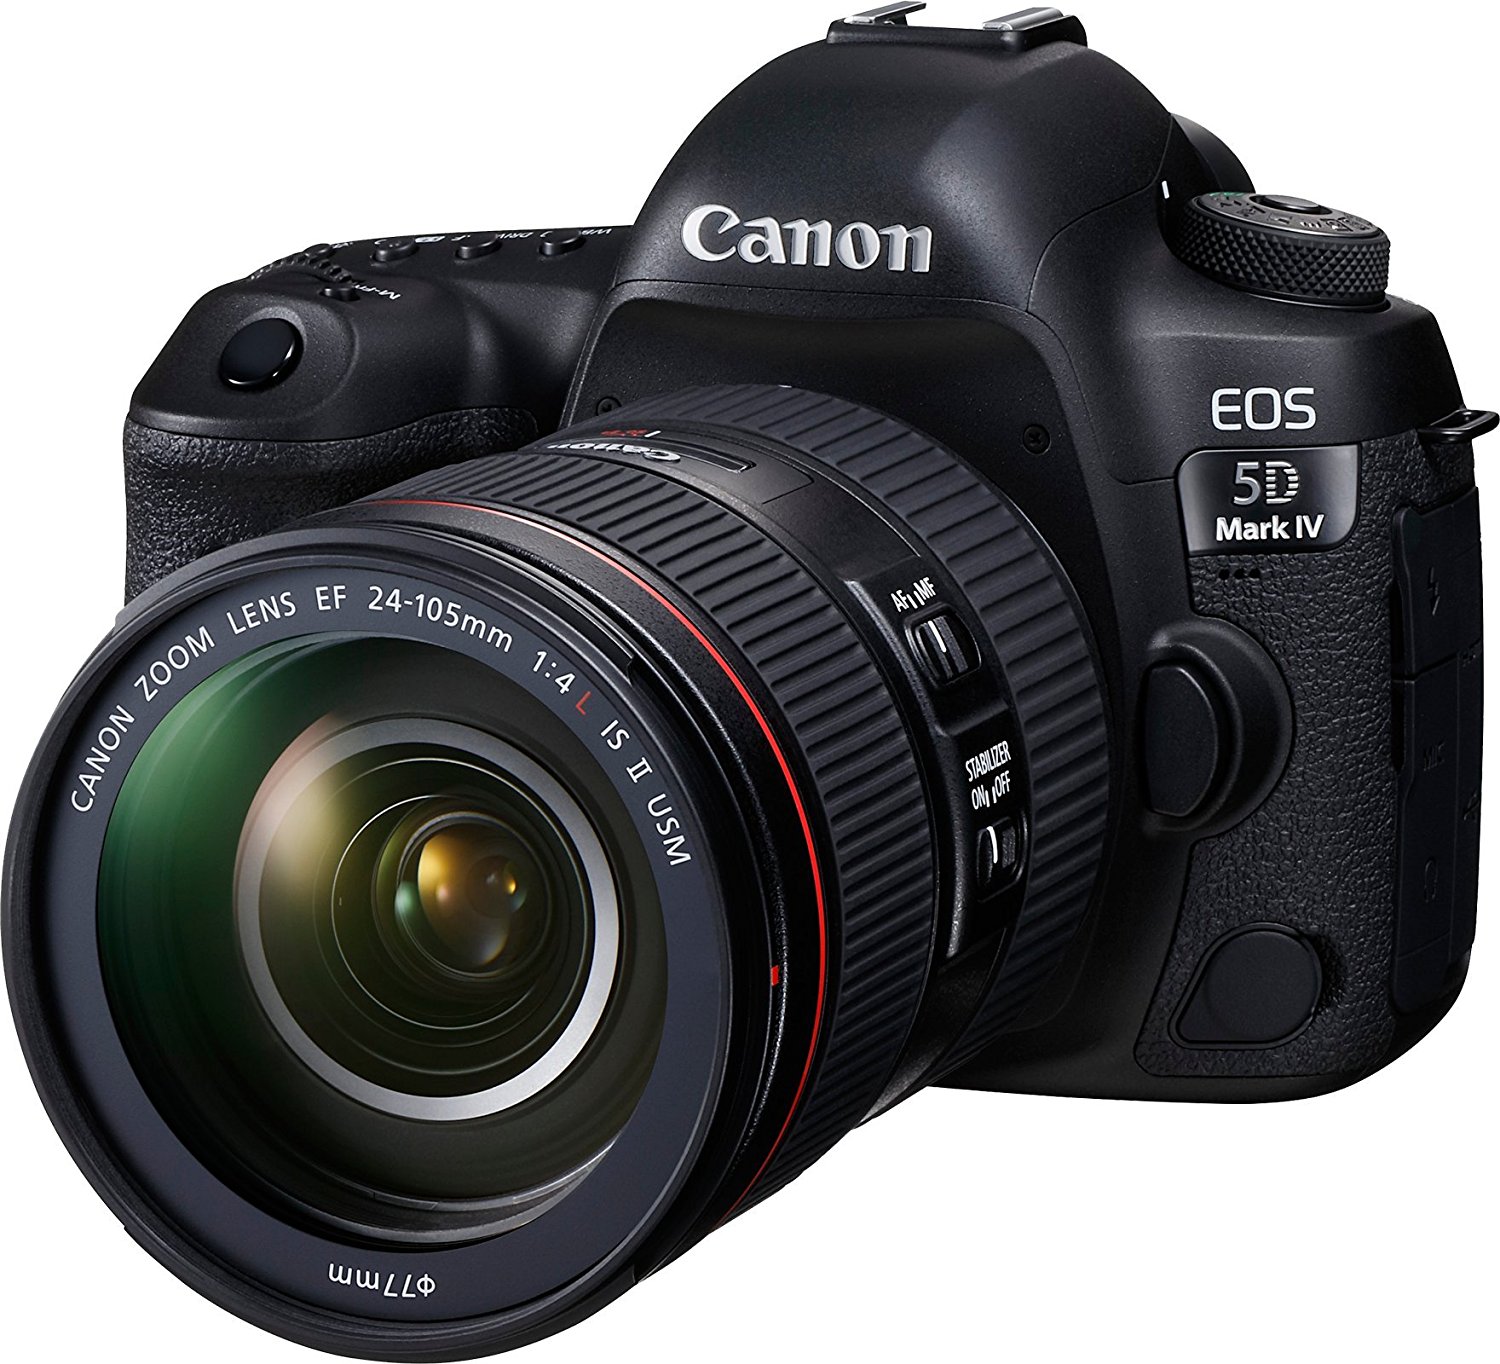 Canon Eos 5D Mark IV 30.4 MP Digital SLR Camera + EF: Amazon.in ...